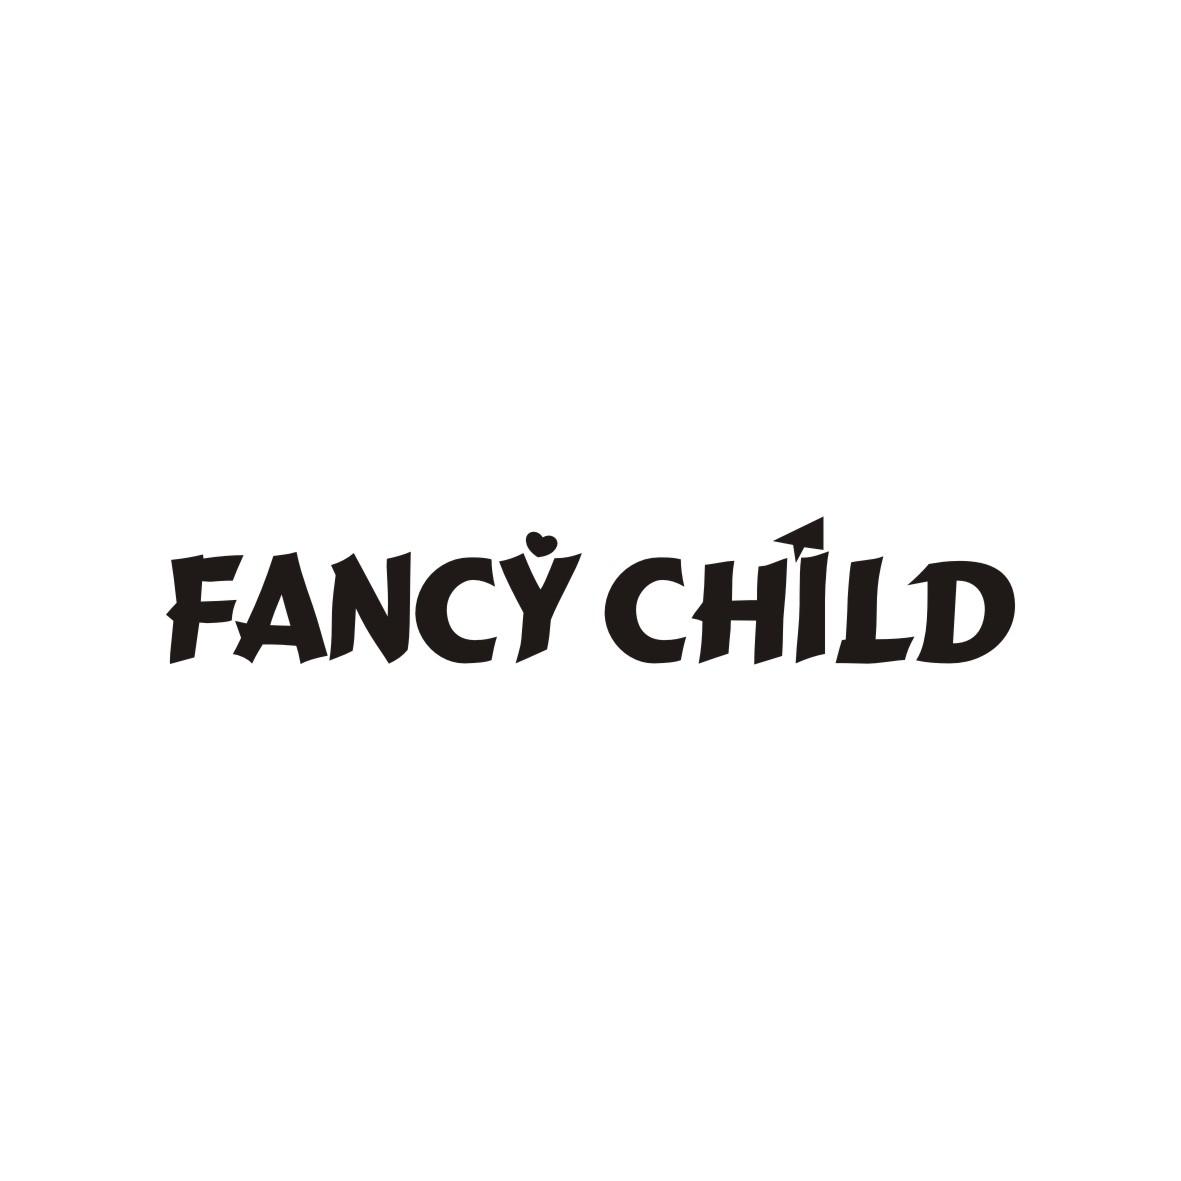 FANCY CHILD商标转让